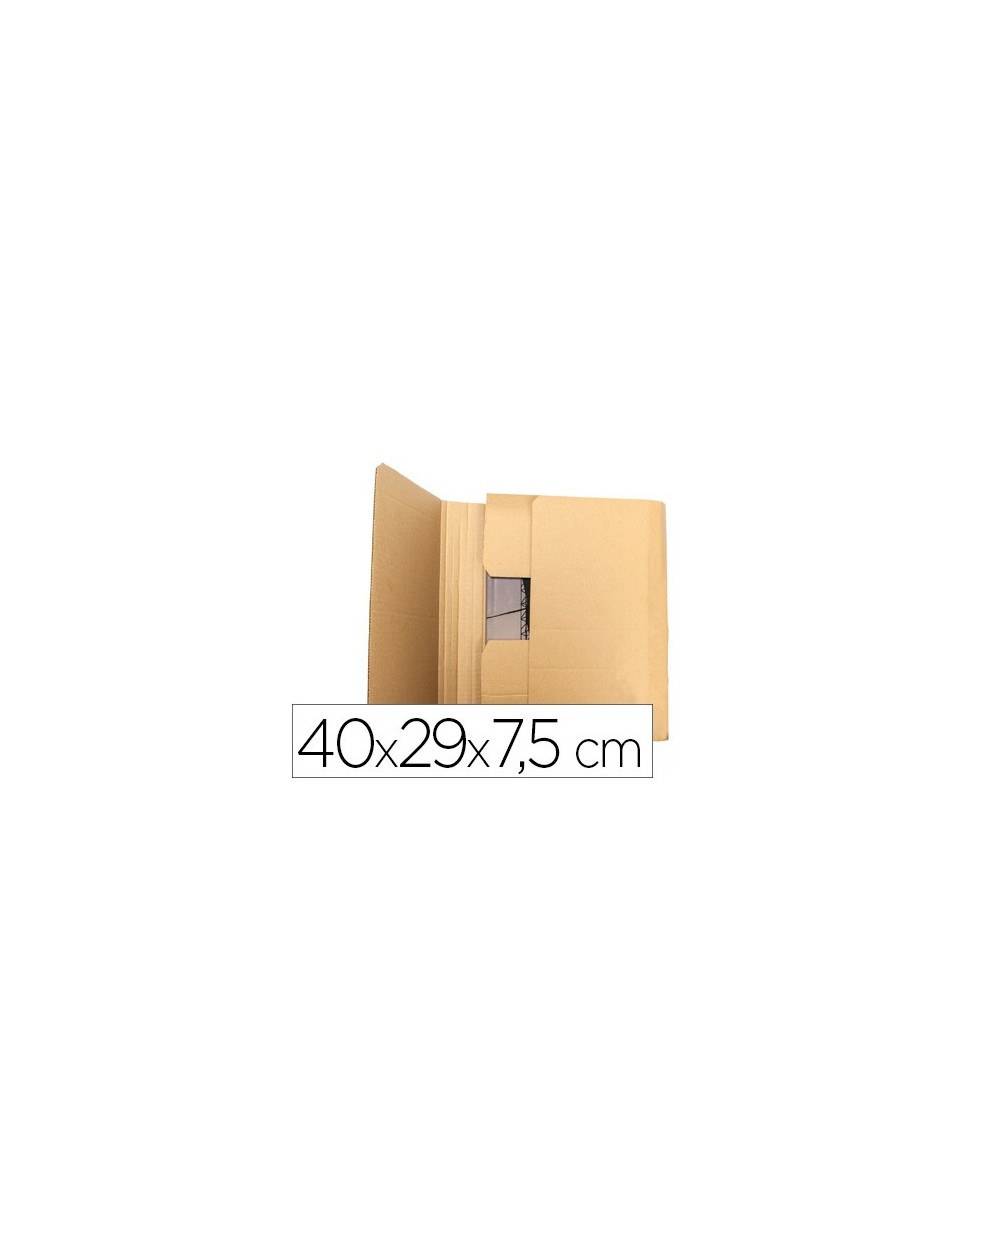 Caja para embalar q connect libro medidas 400x290x75 mm espesor carton 3 mm